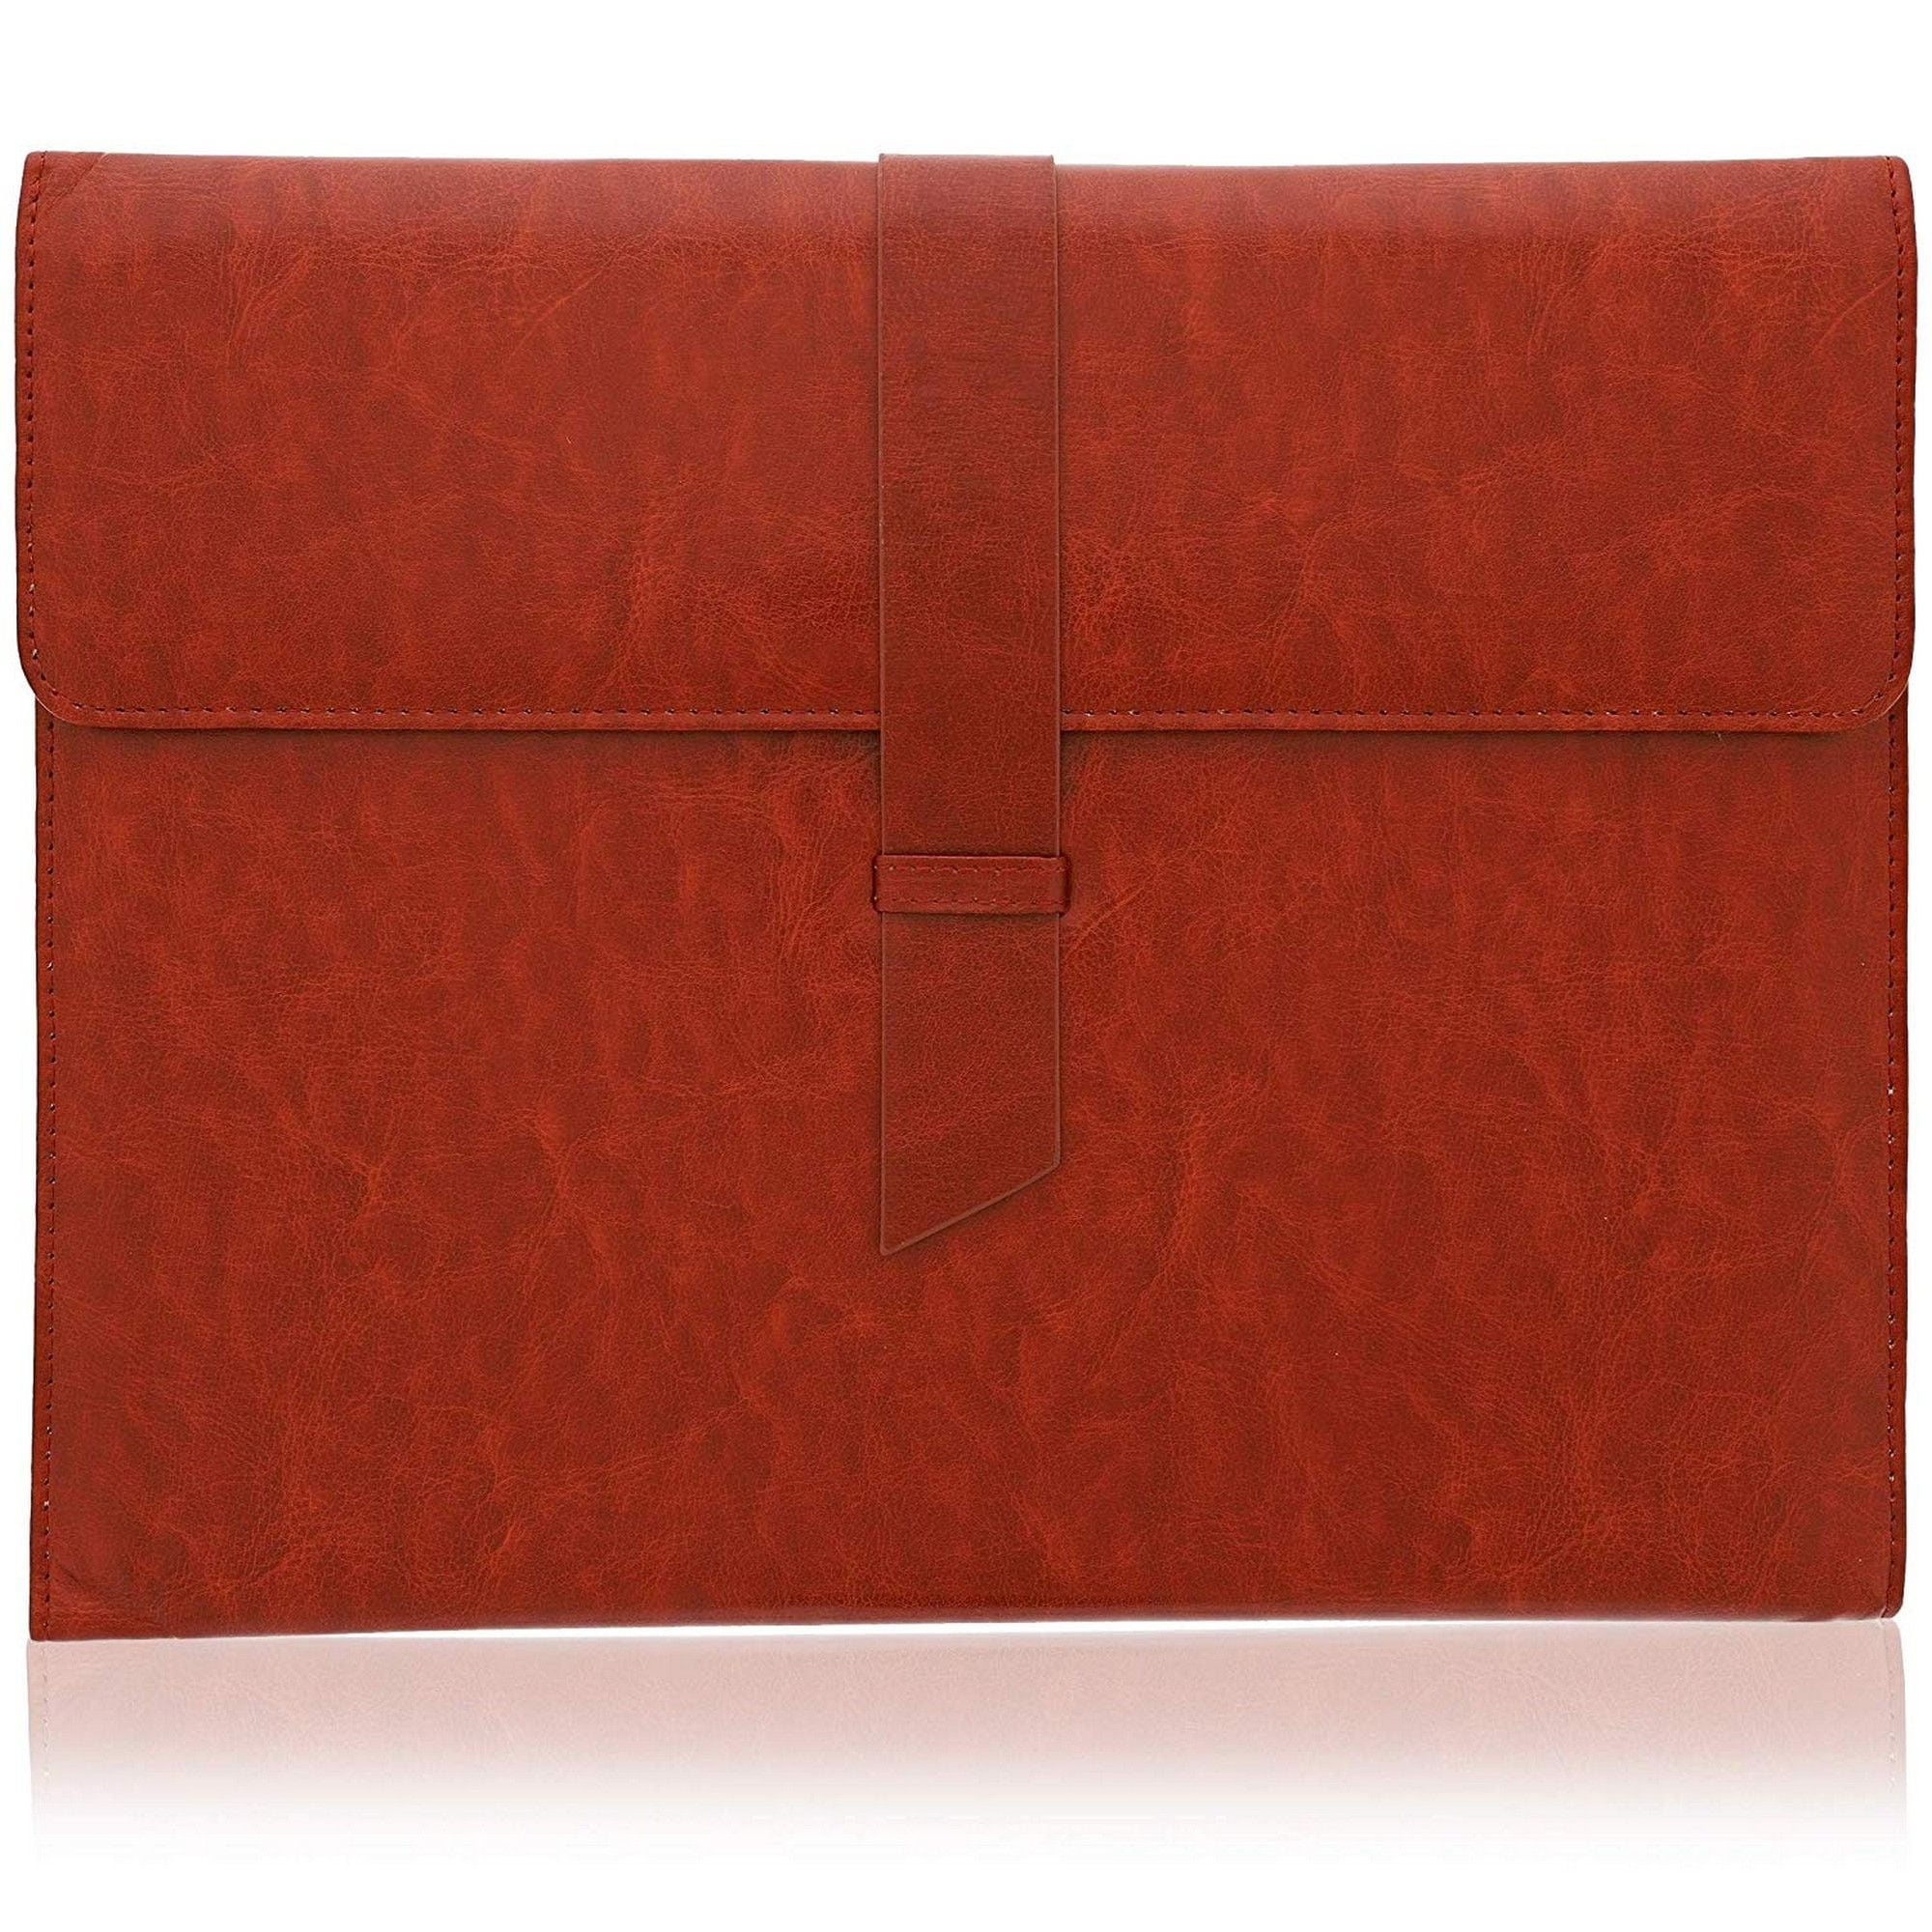 10 x 12.5 Inches Faux Leather Red Business Portfolio Padfolio Folder 